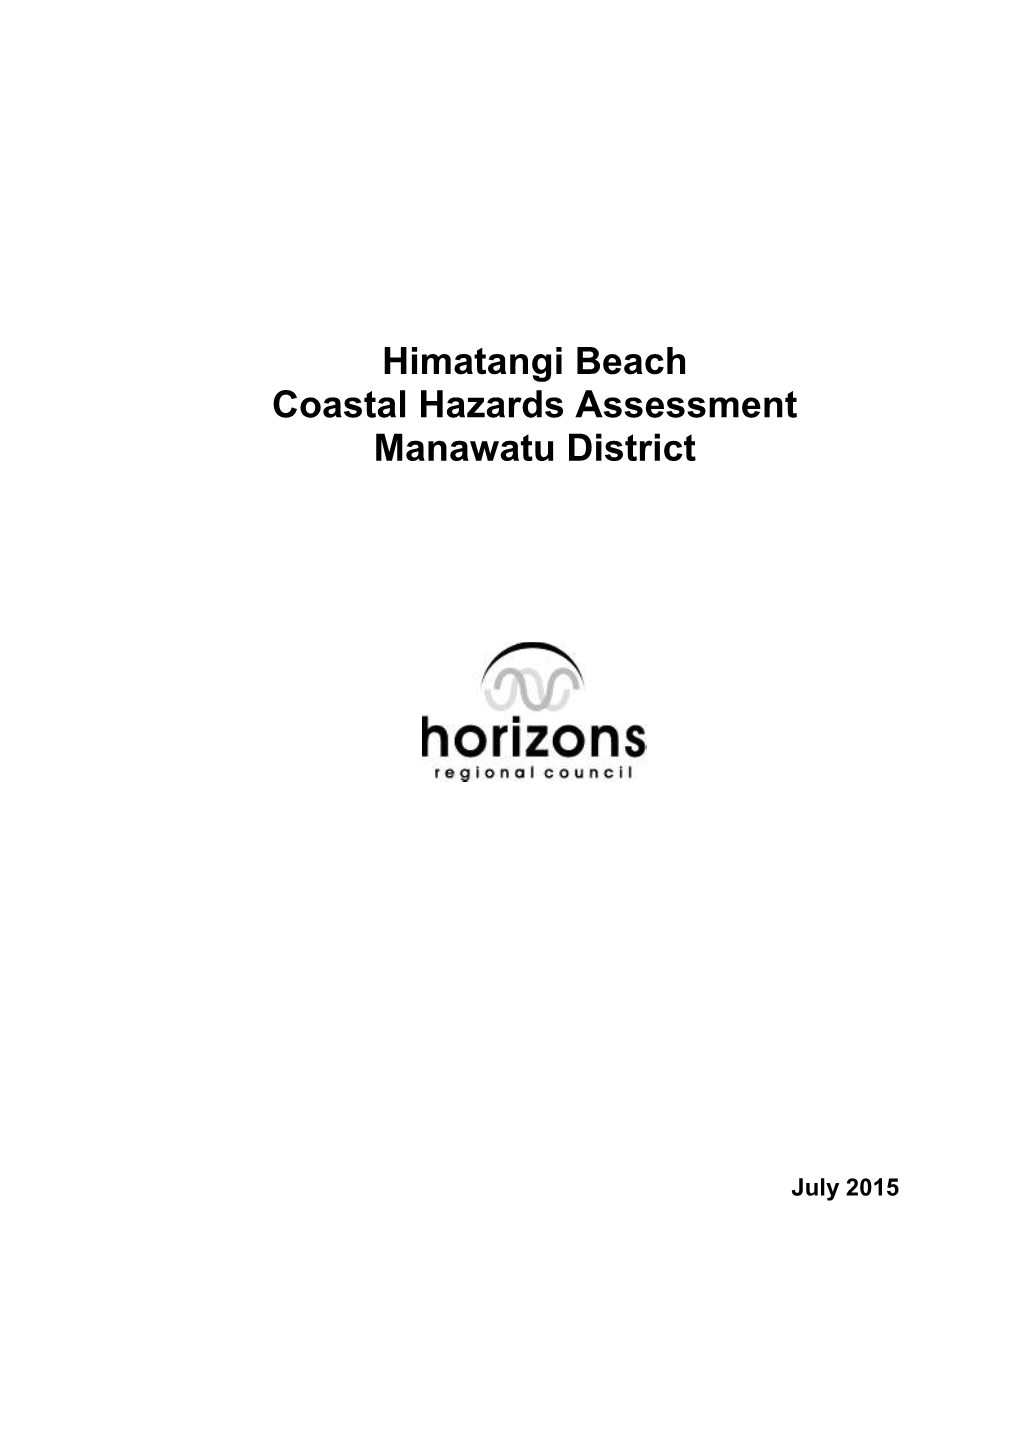 Himatangi Beach Coastal Hazards Assessment Manawatu District